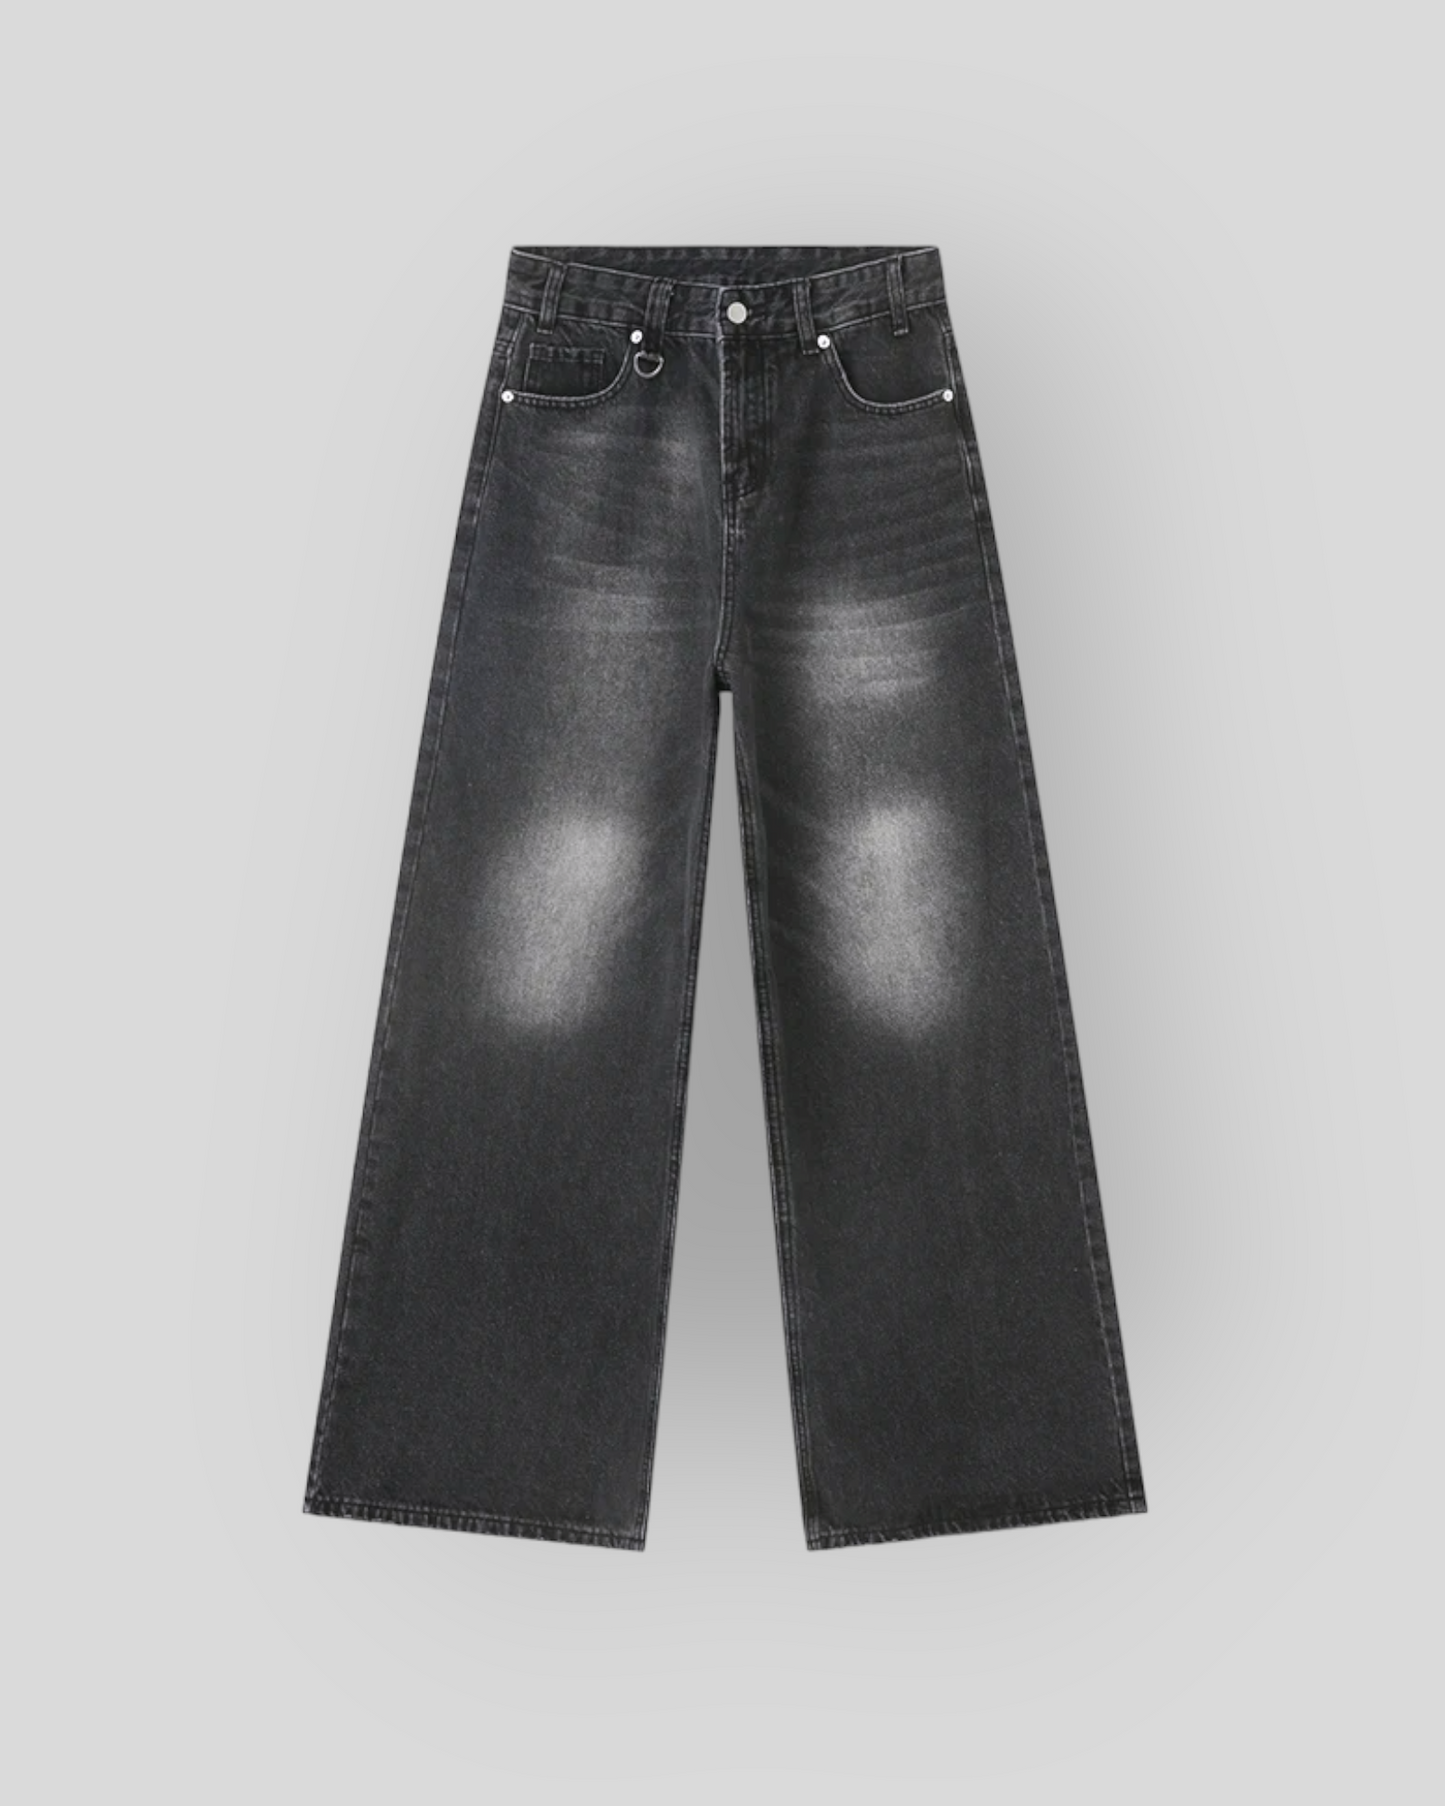 Men's Denim Black Grey Loose Fit Baggy Jeans, American Style.